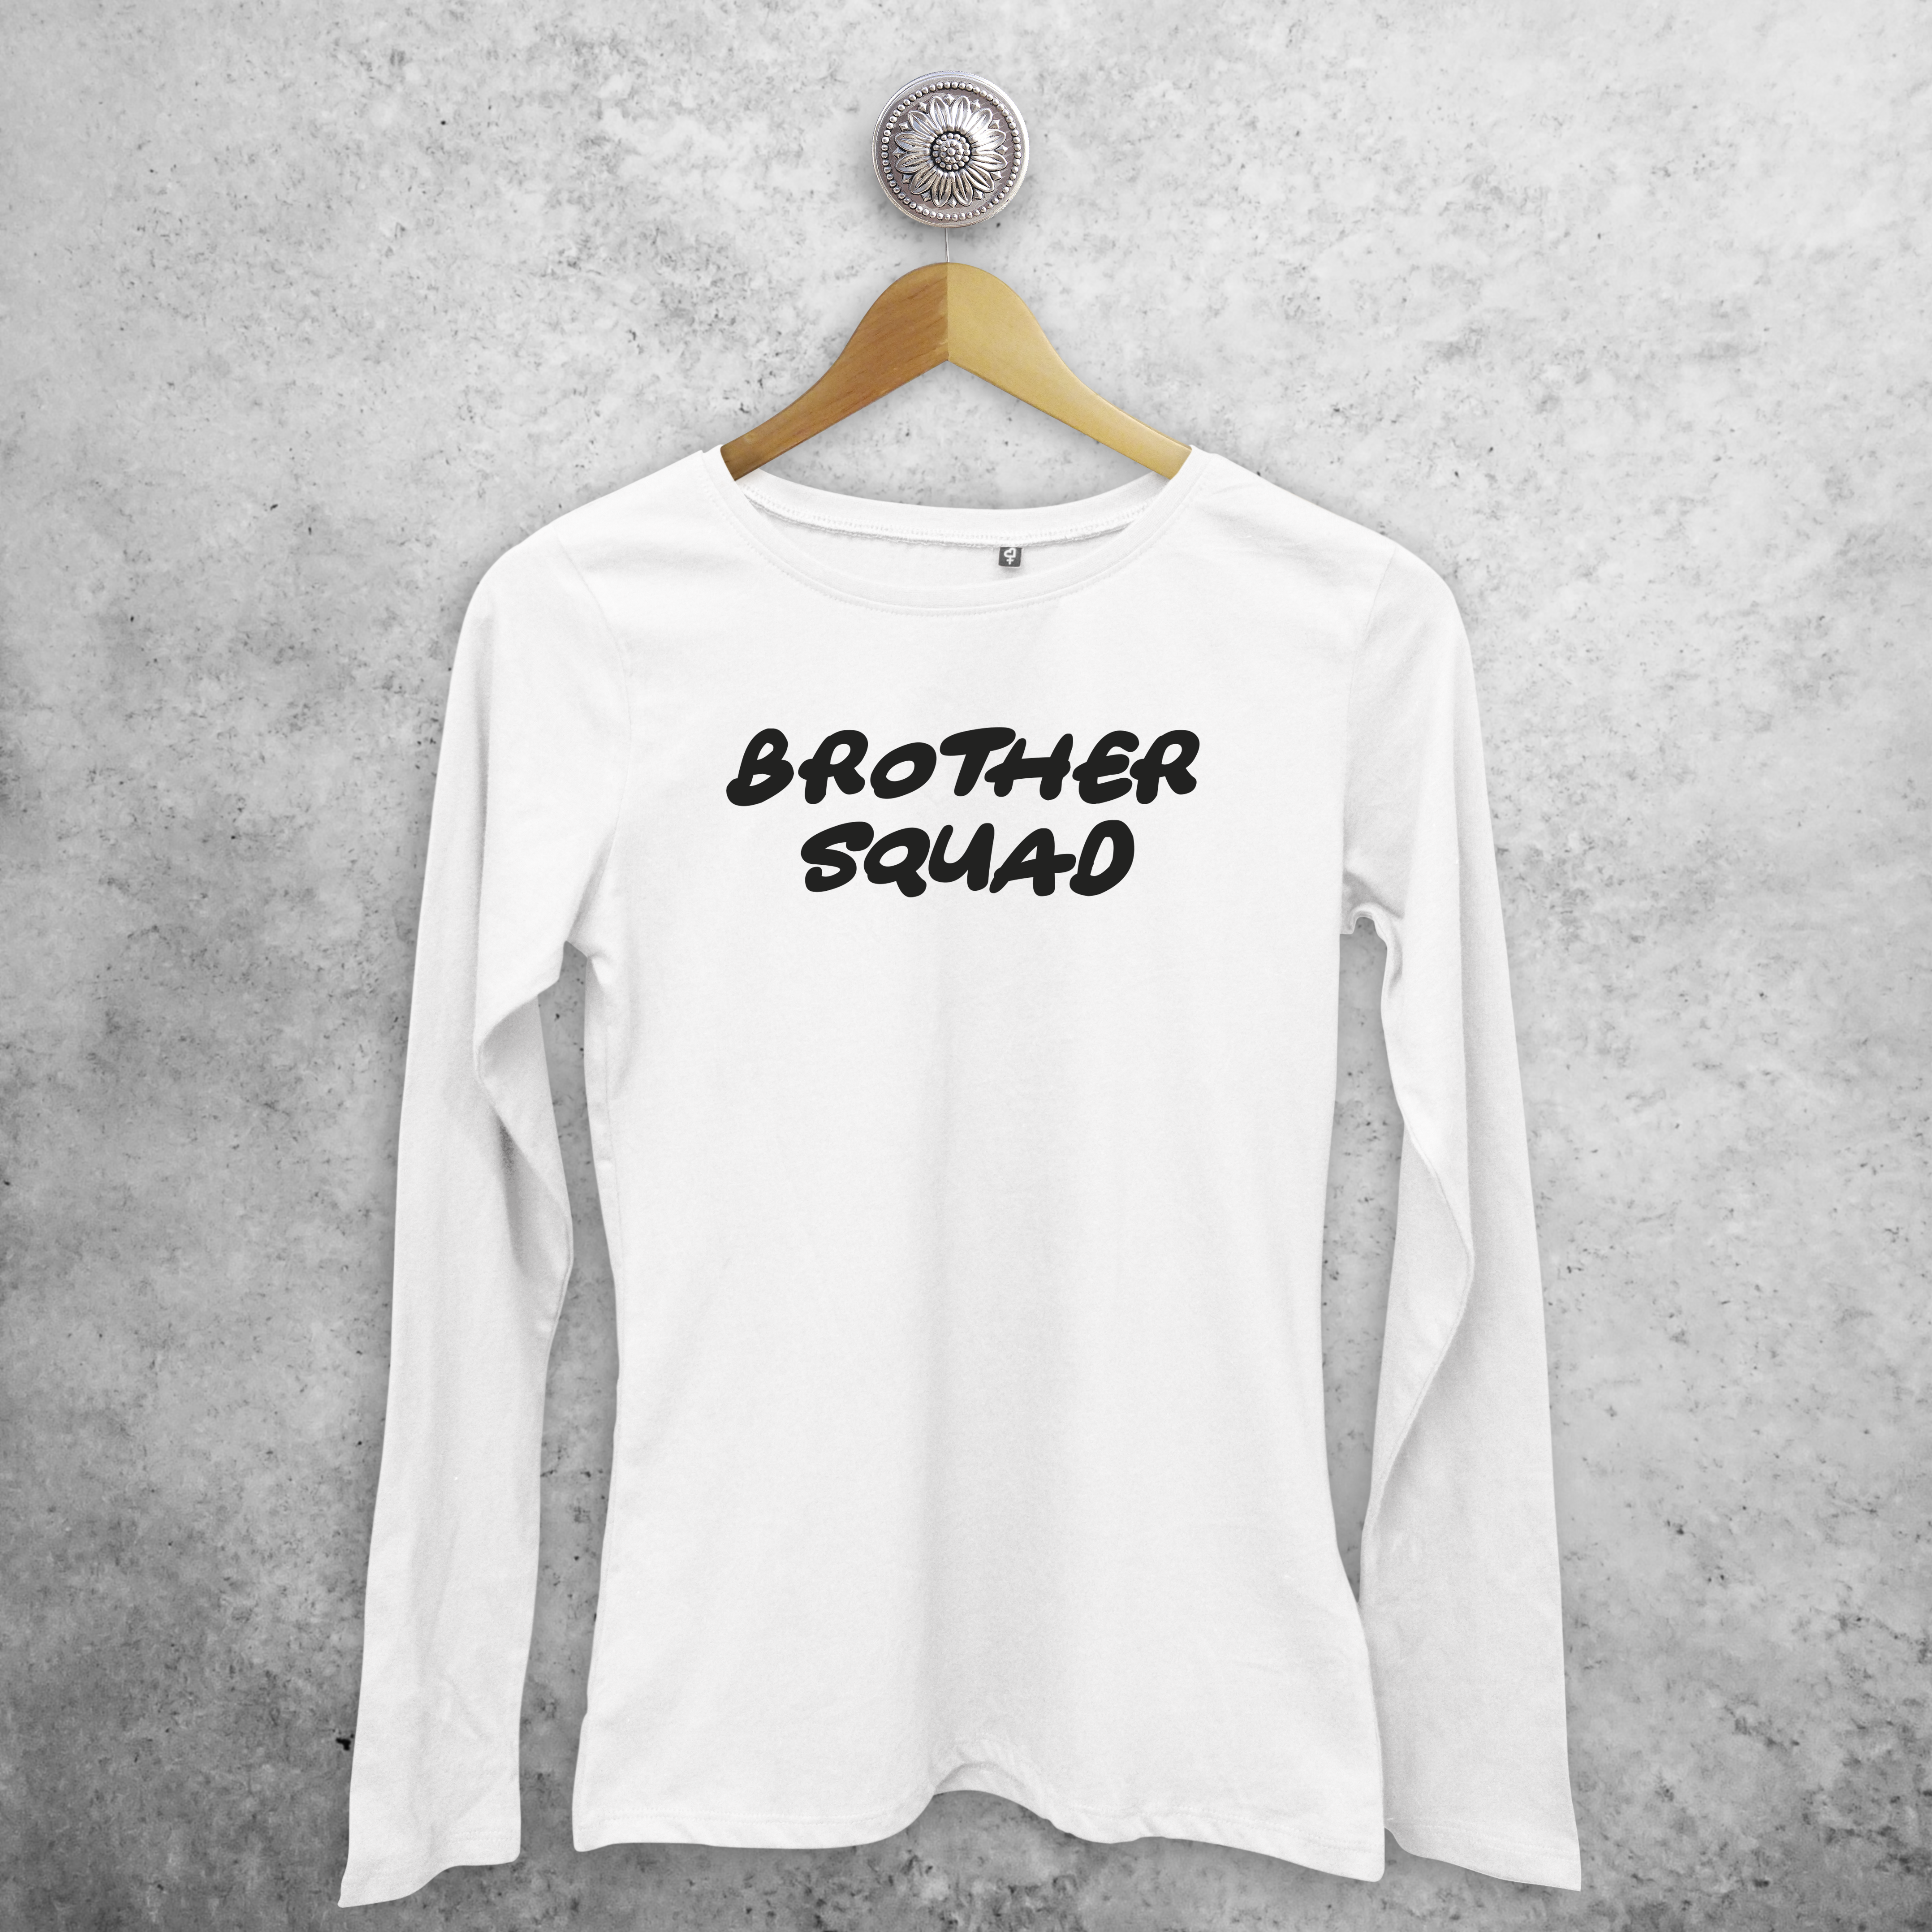 'Brother squad' volwassene shirt met lange mouwen